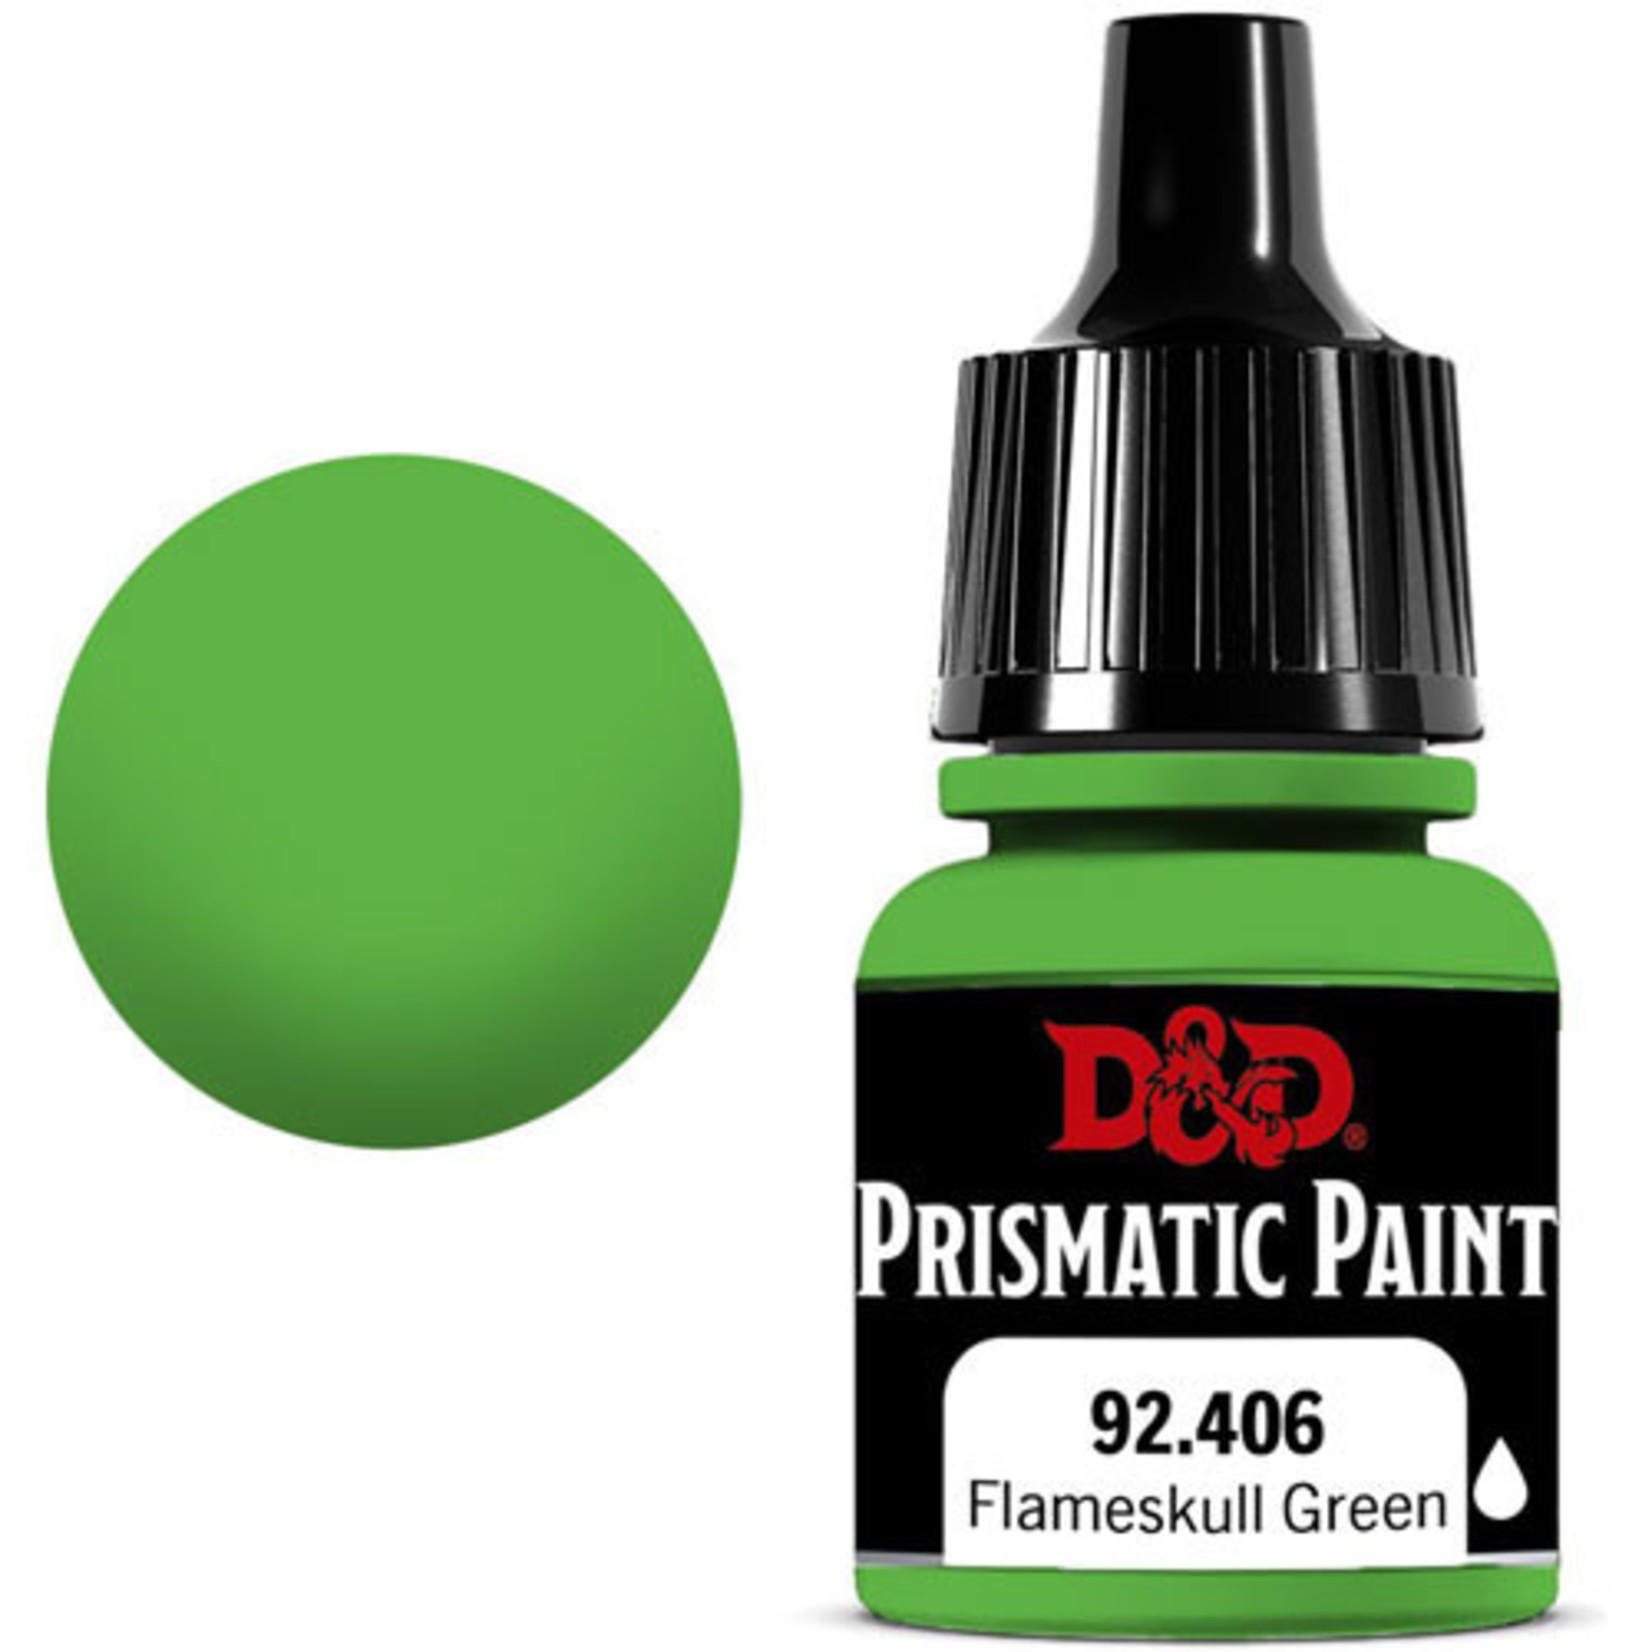 WIZKIDS/NECA D&D Prismatic Paint: Flameskull Green 92.406